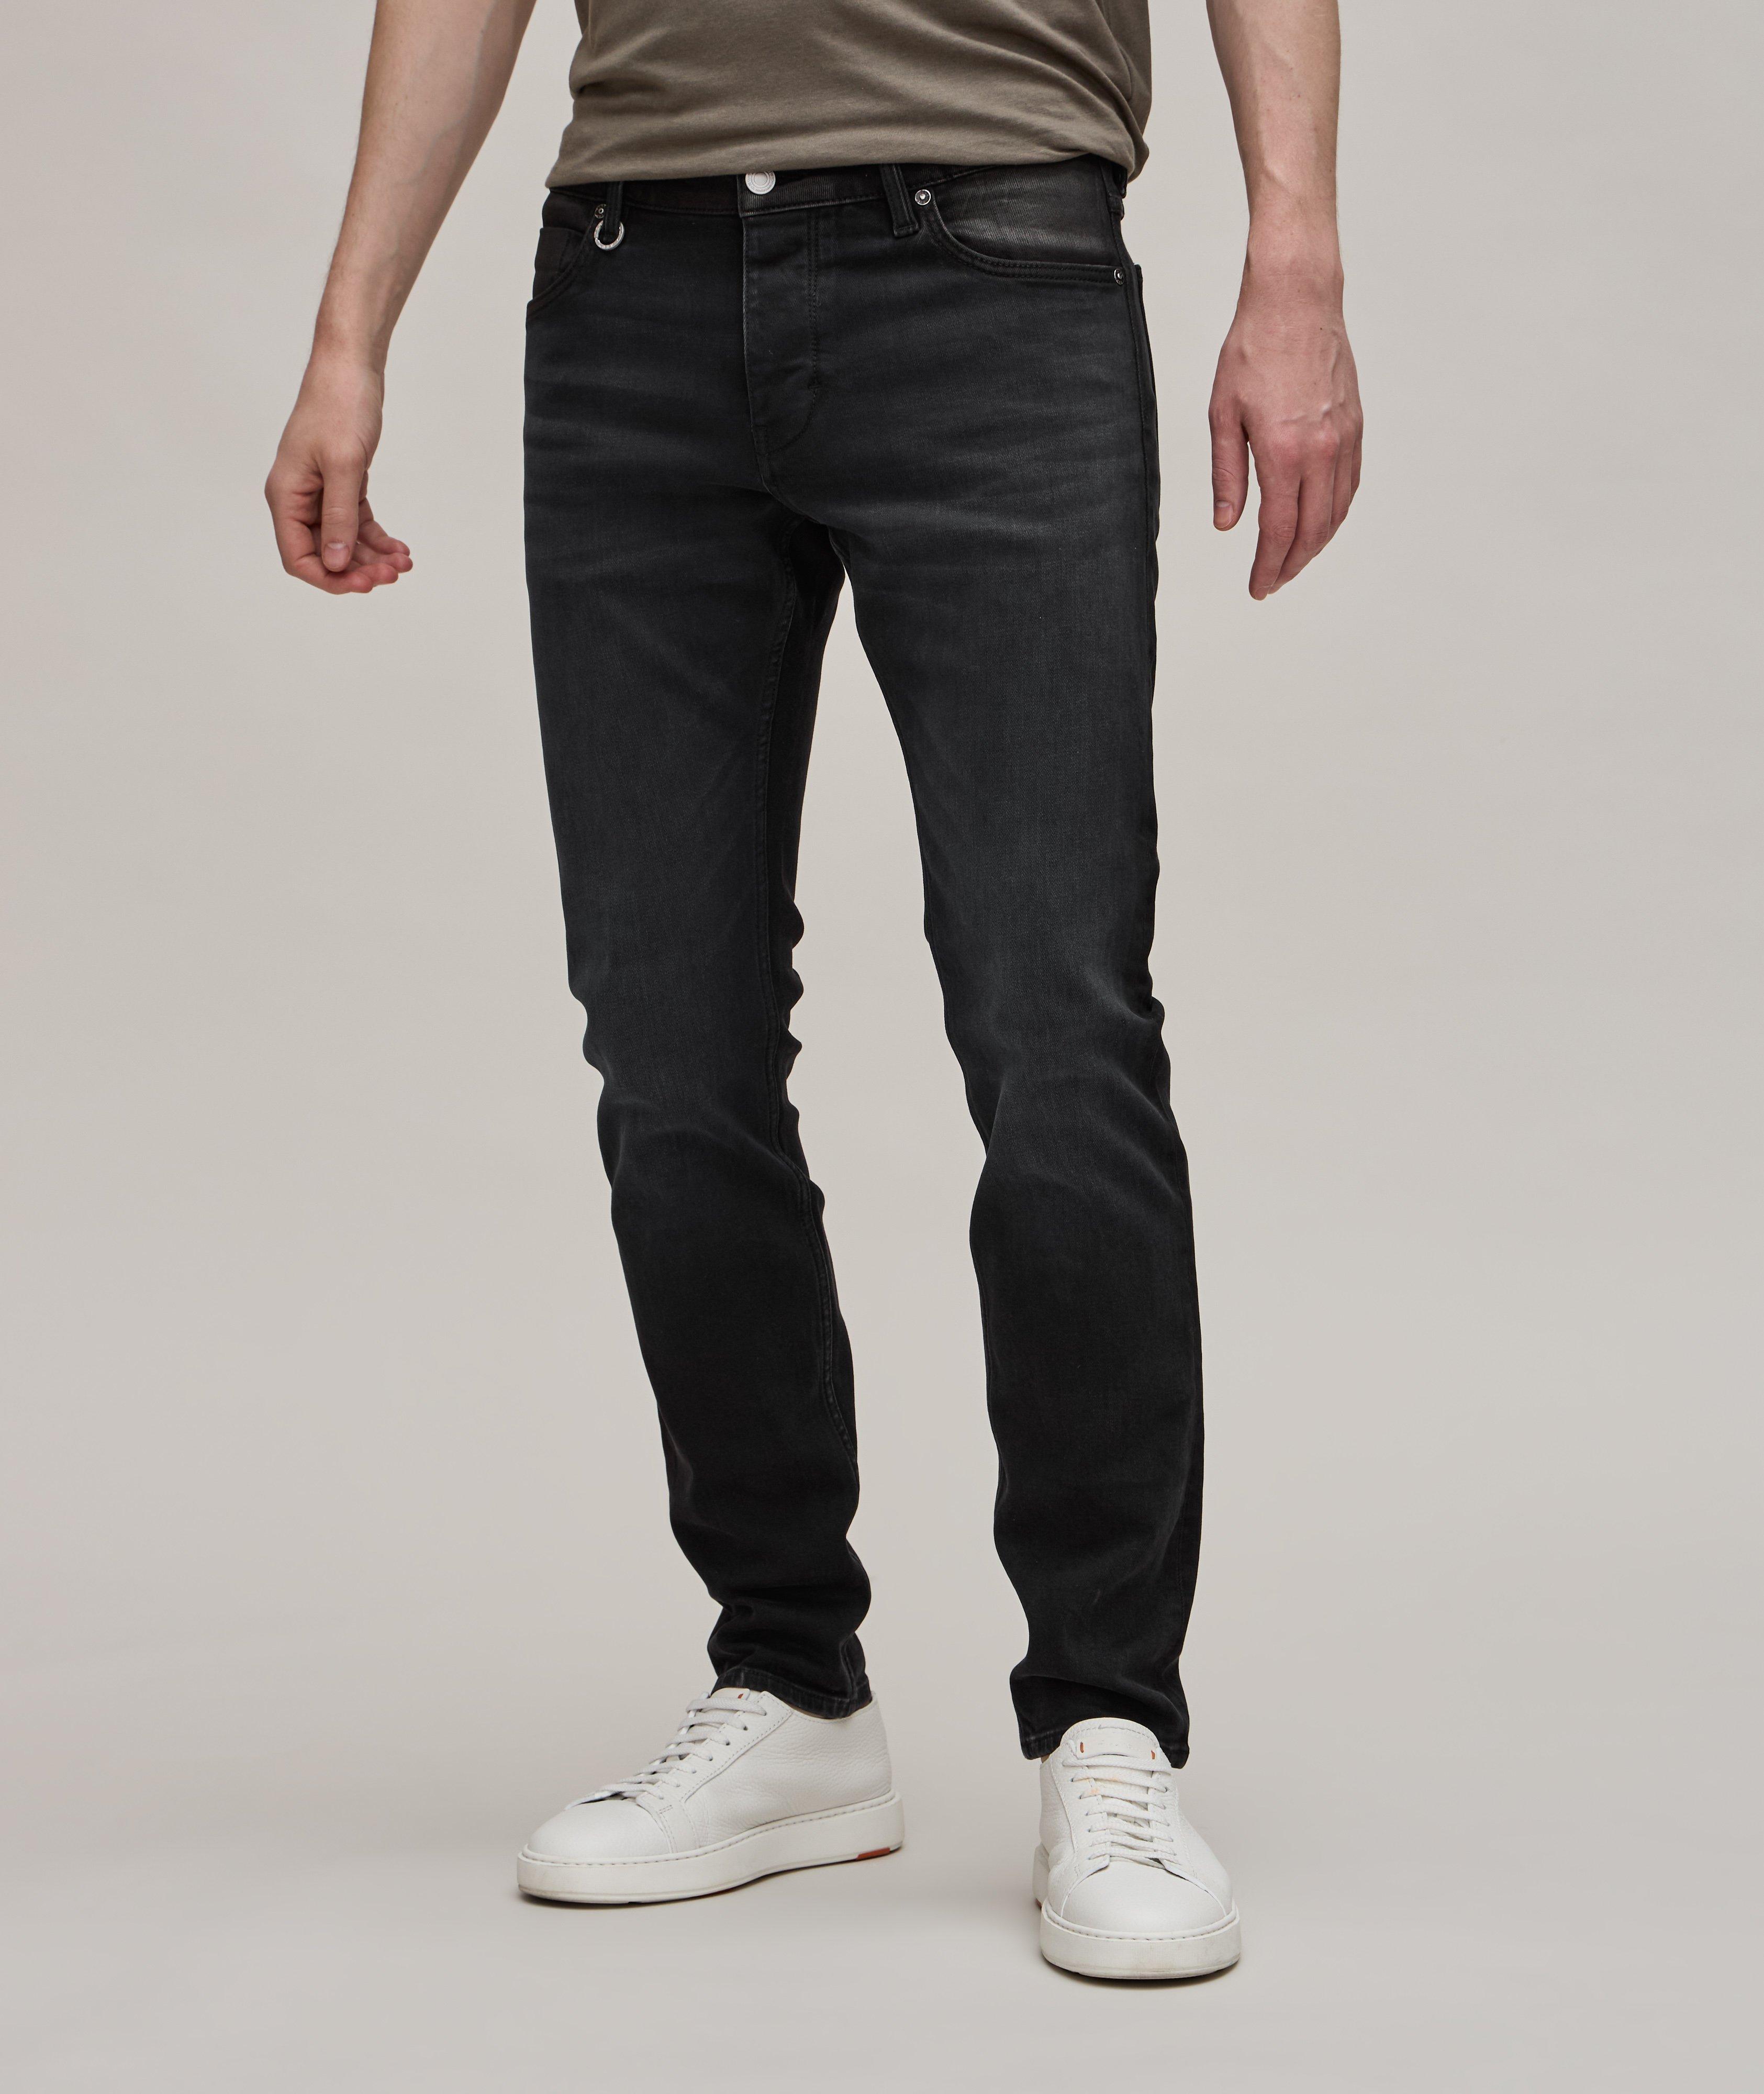 Iggy Skinny Distressed Stretch-Cotton Jeans image 2